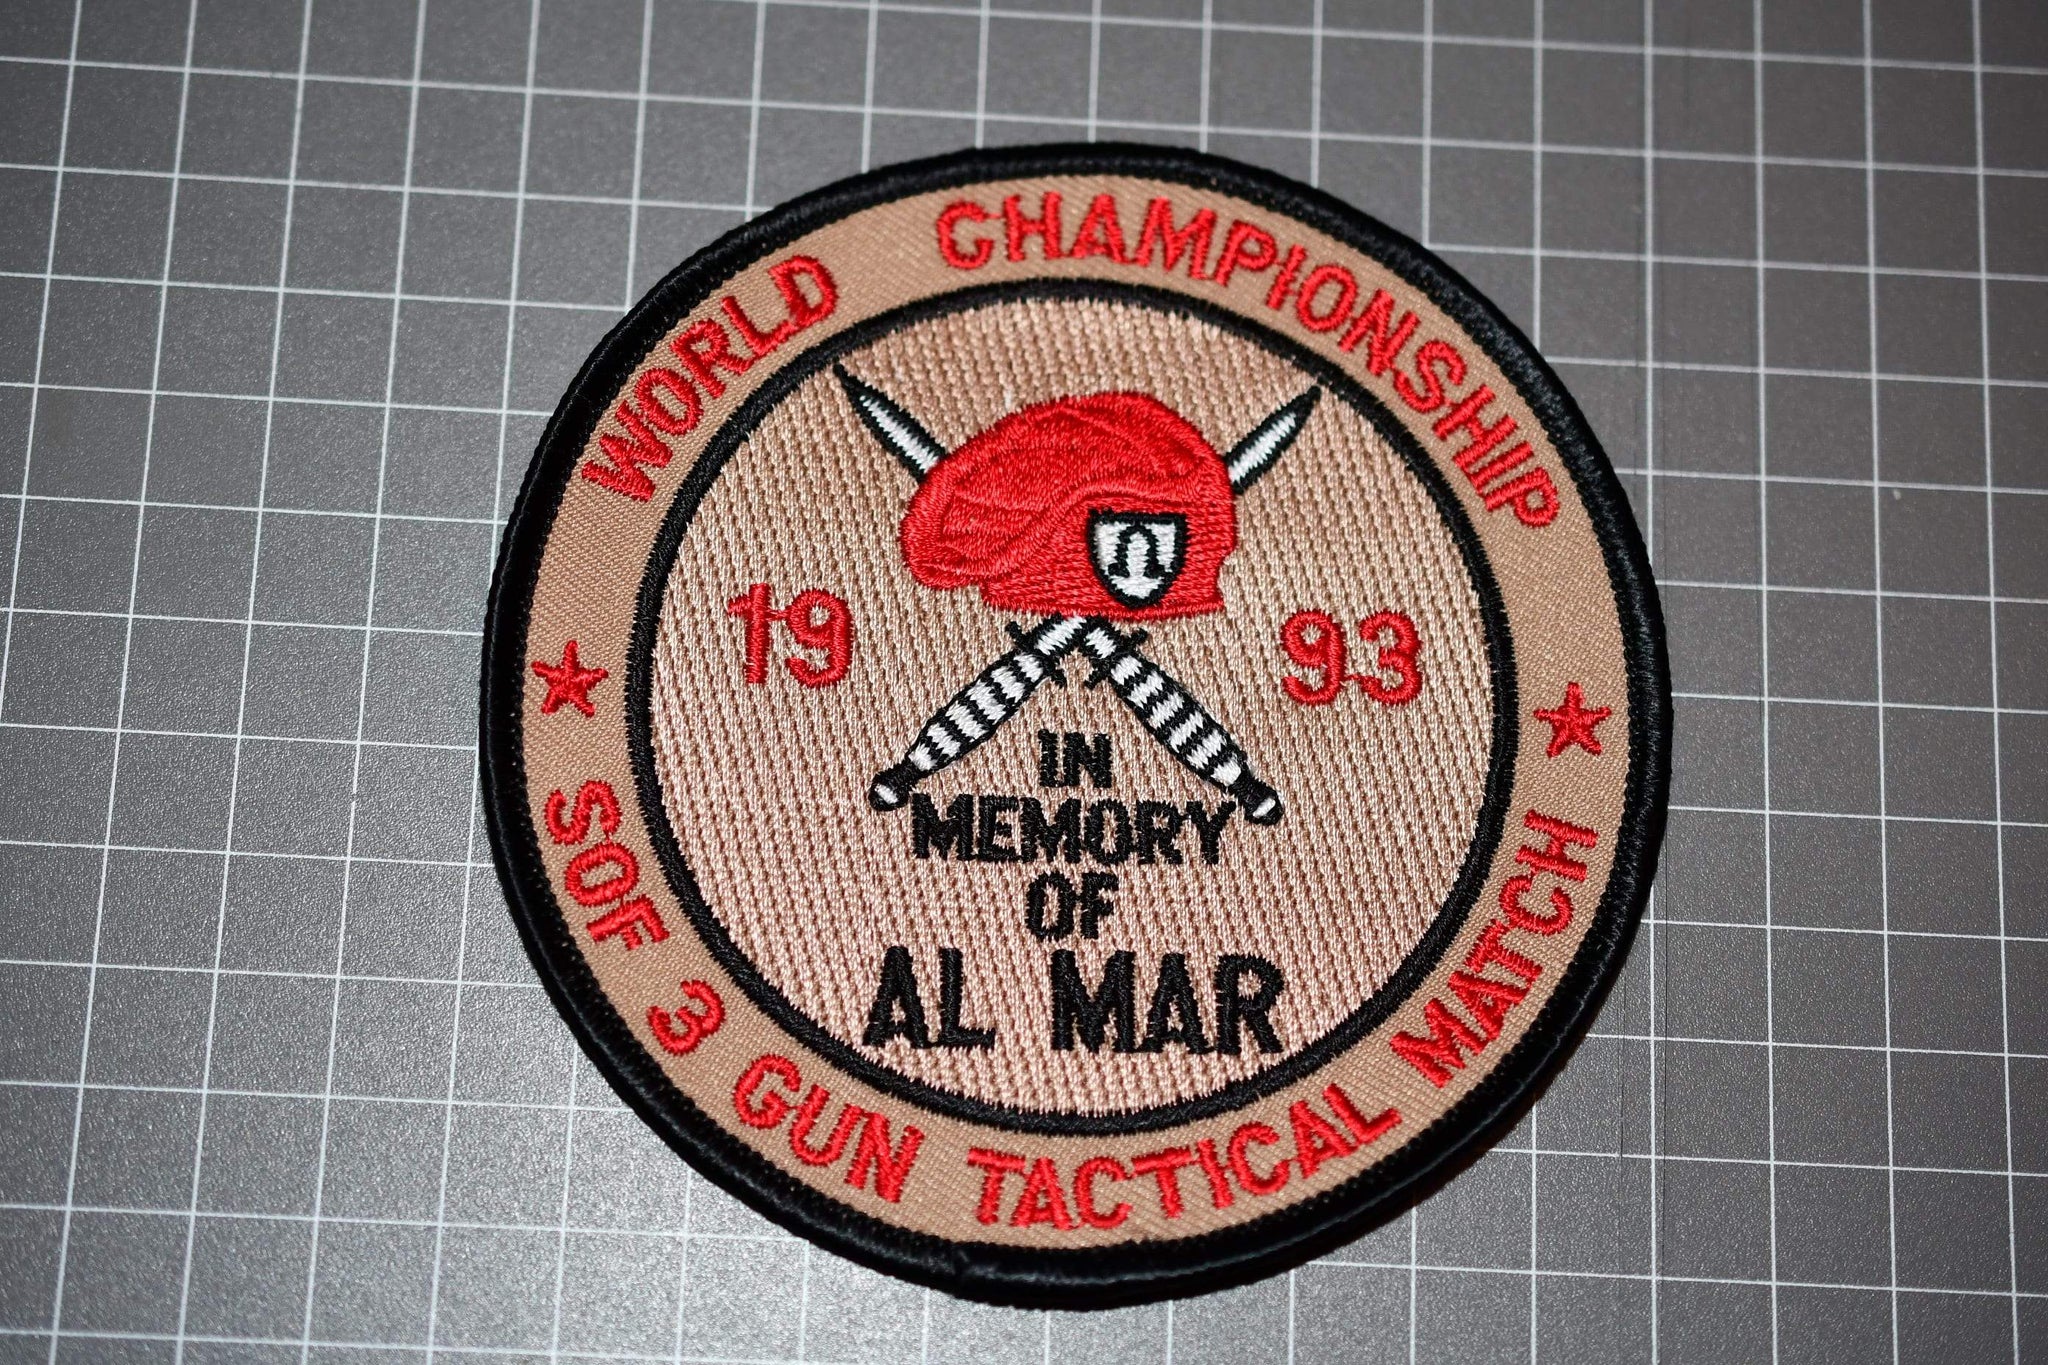 World Championship 1993 SOF 3 Gun Tactical Match Patch (B10-066)